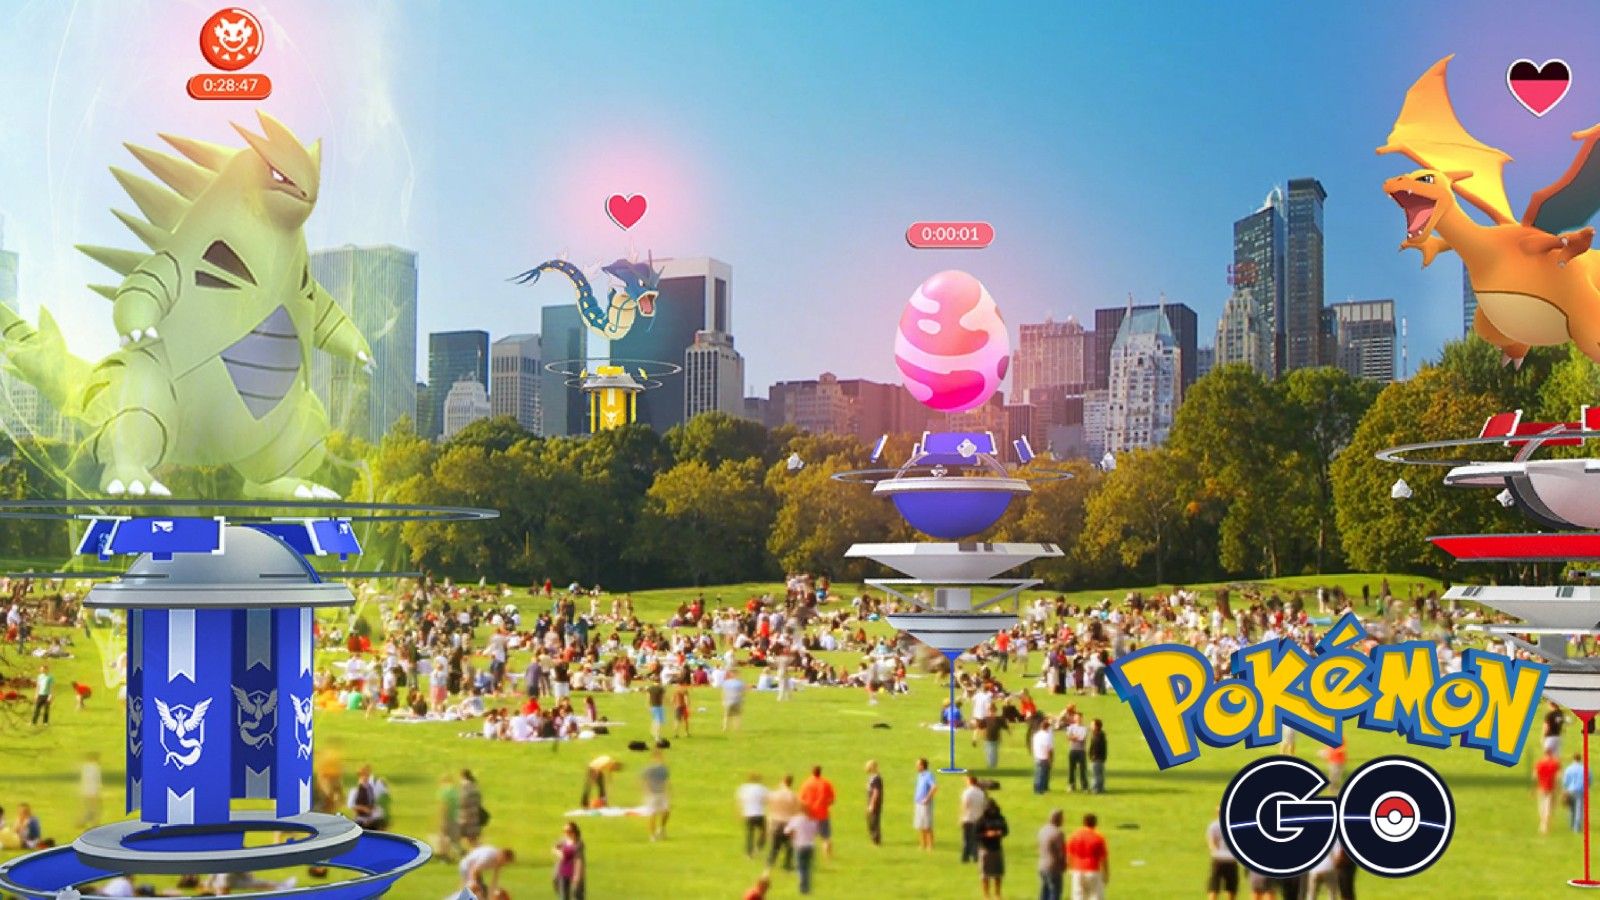 Pokemon-GO-Fest-city-events-photo-opps